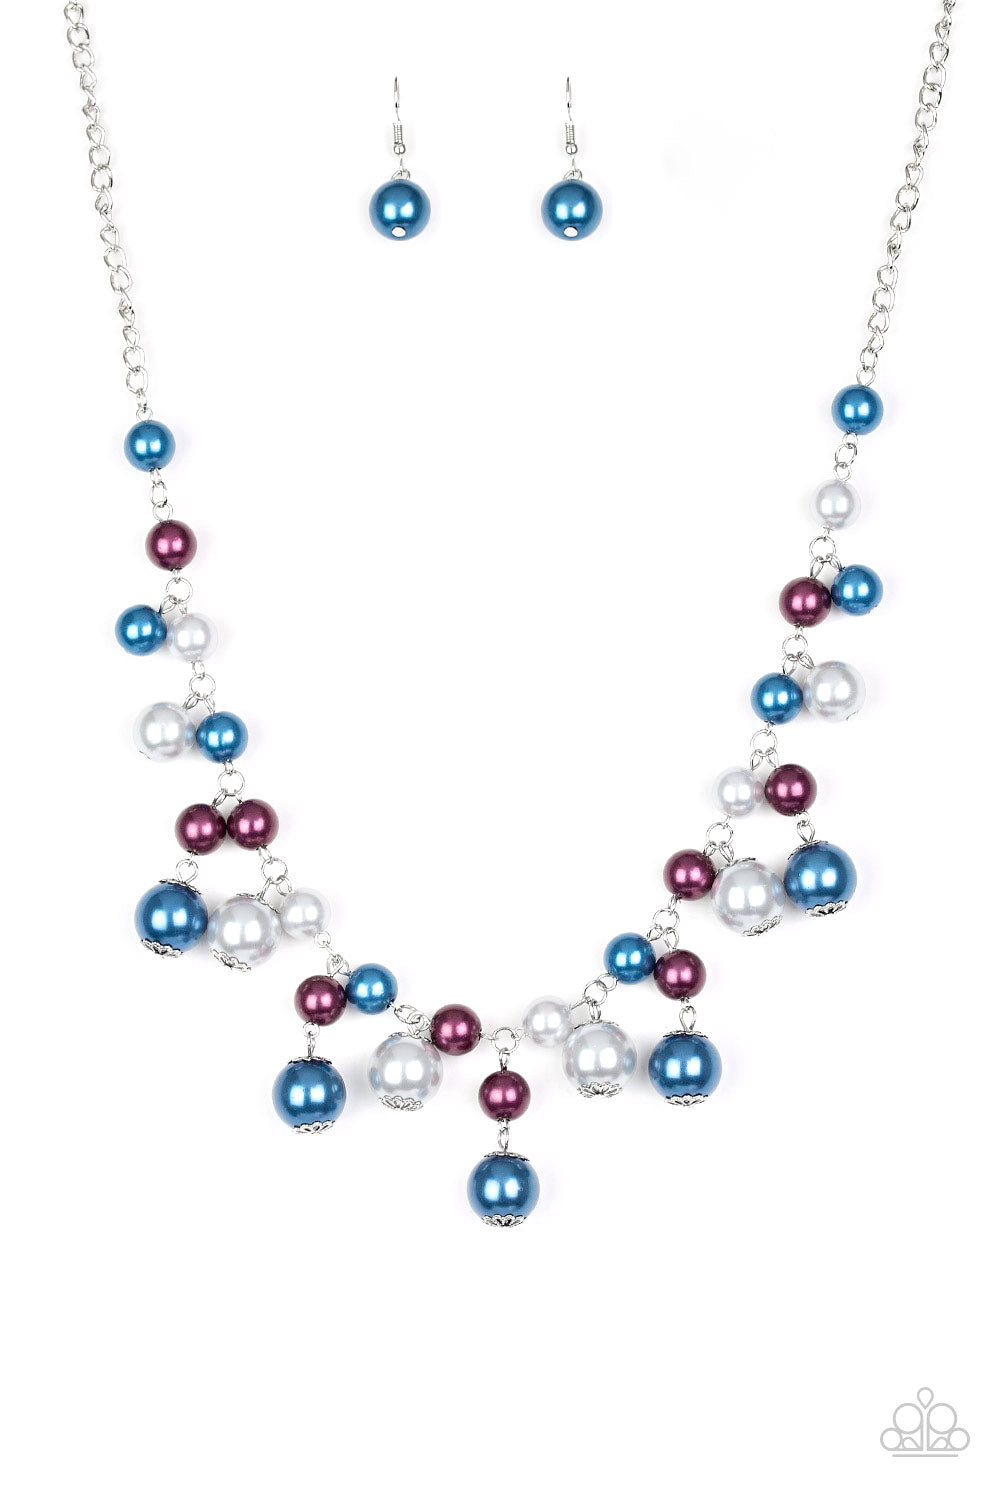 Soon To Be Mrs. - Multi (Pearls) Necklace freeshipping - JewLz4u Gemstone Gallery